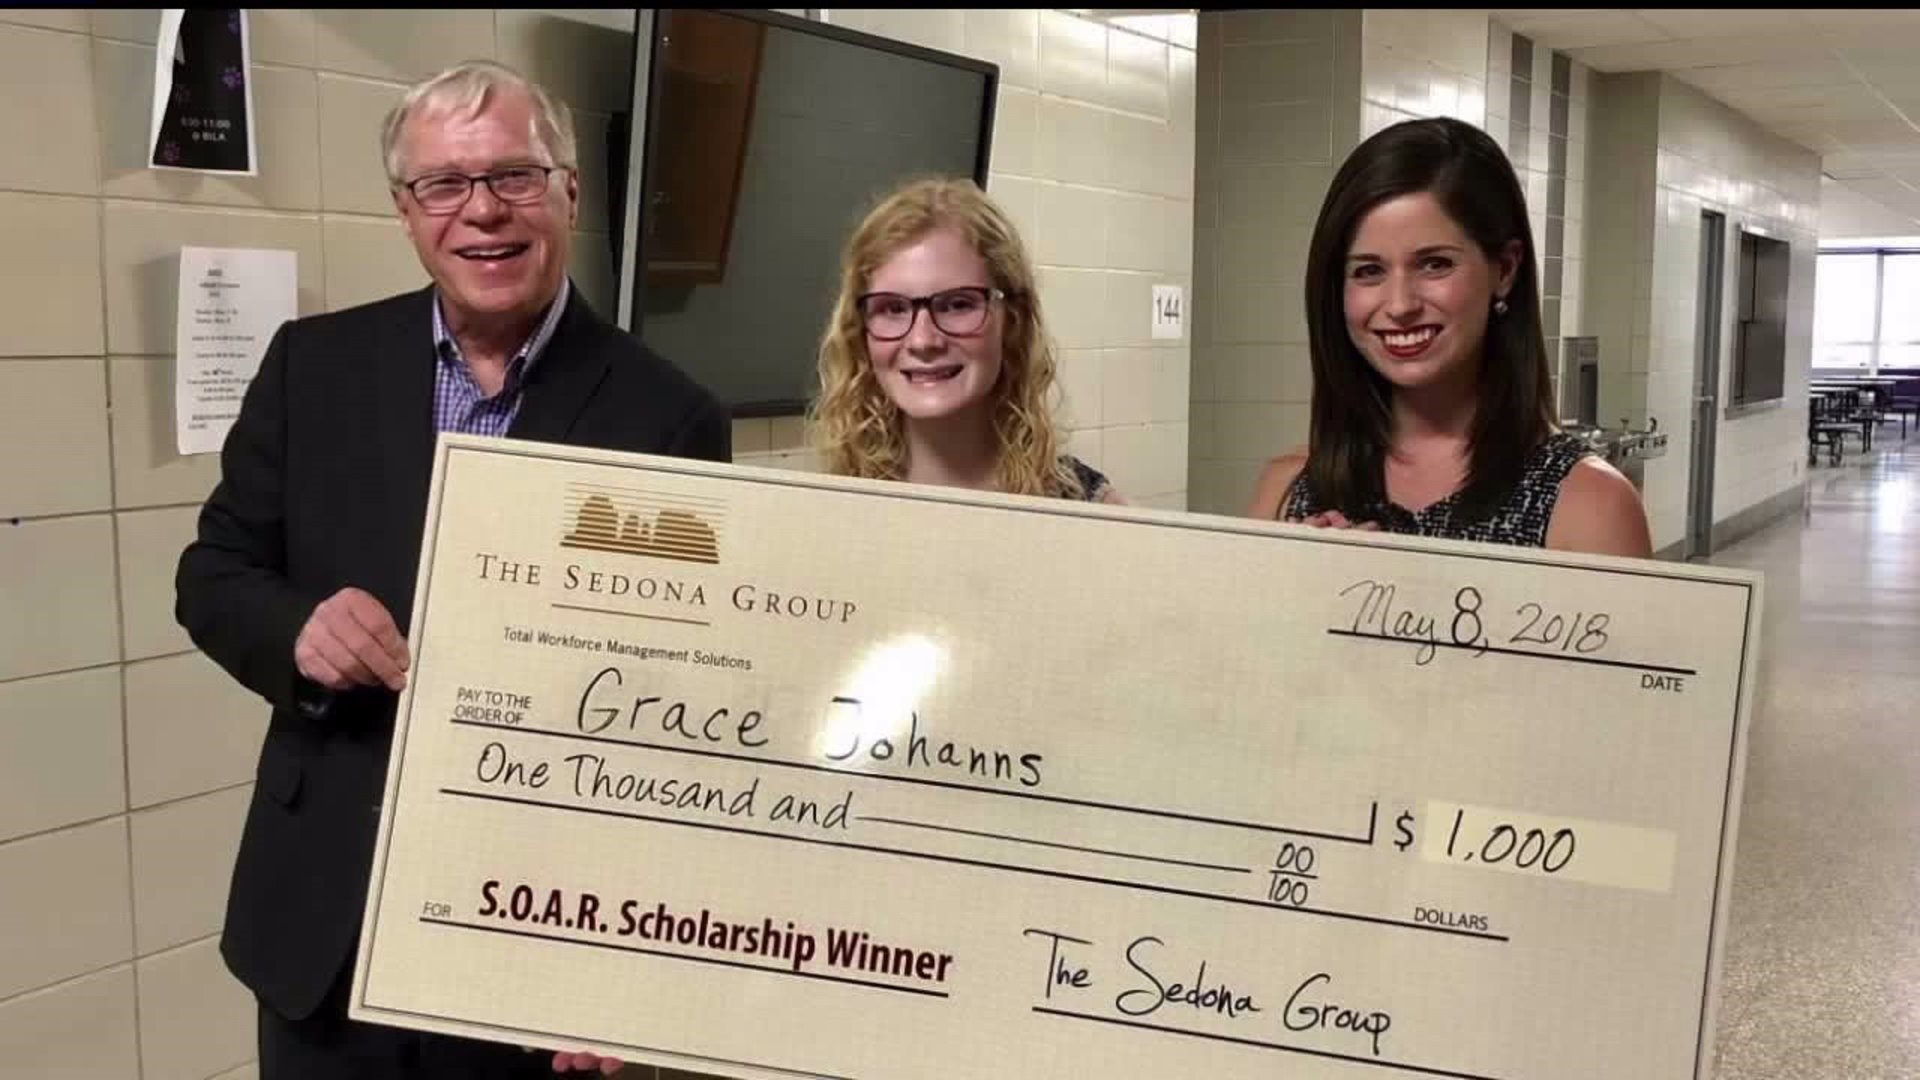 SOAR Scholarship Recipient #4: Grace Johanns